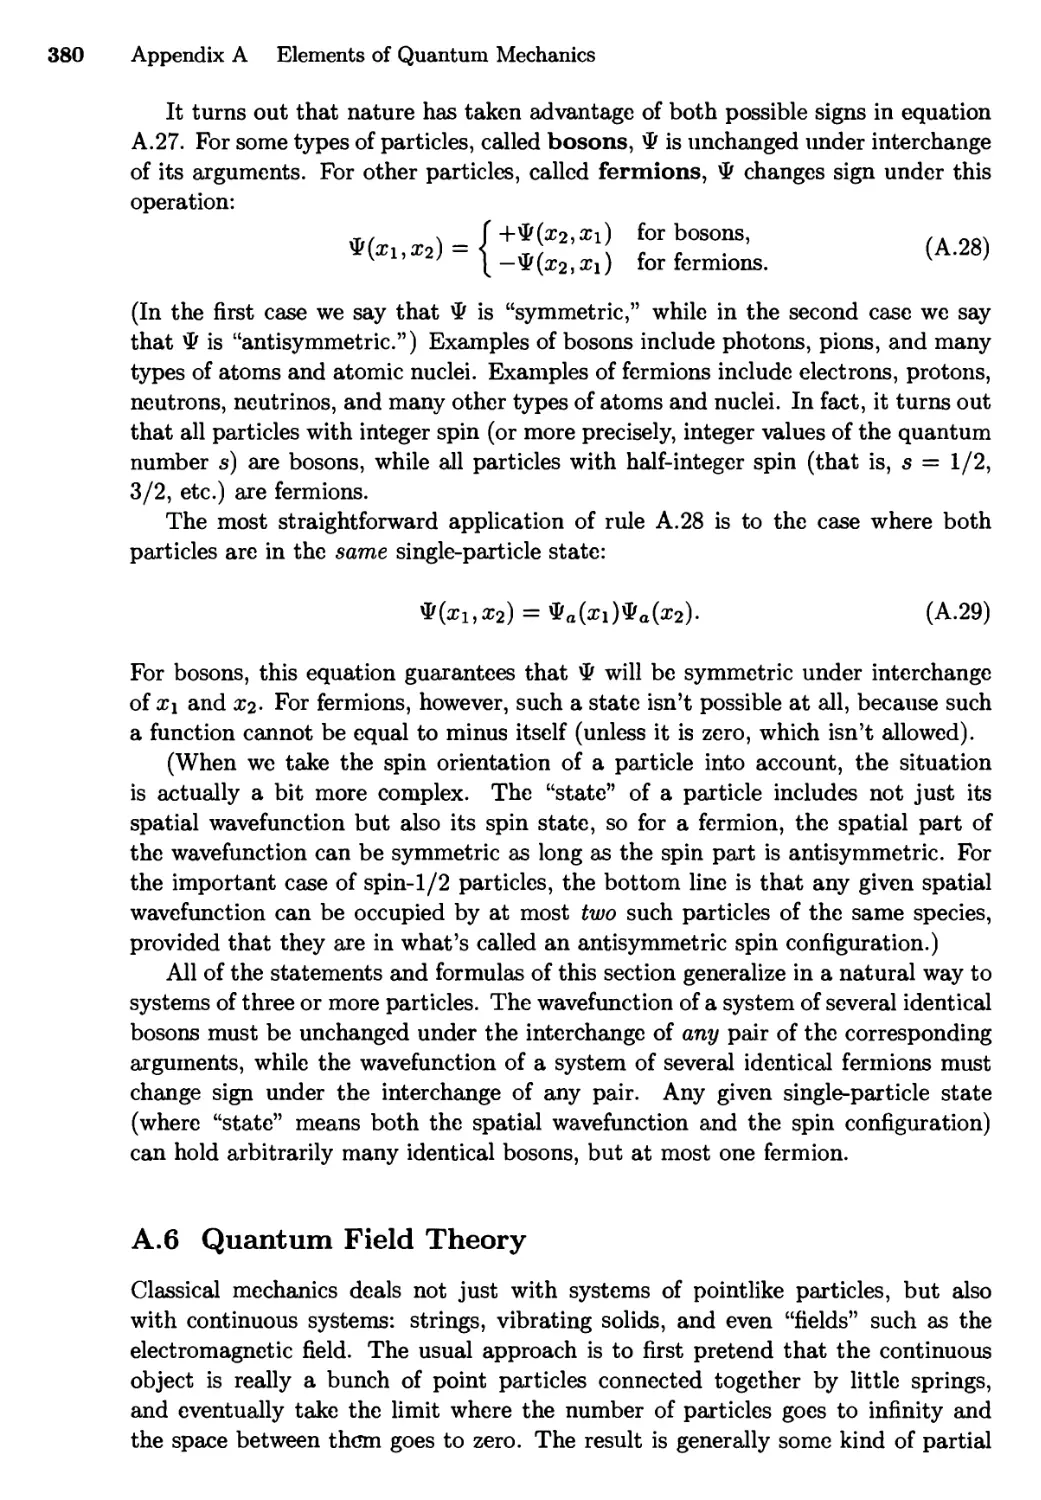 A.6 Quantum Field Theory